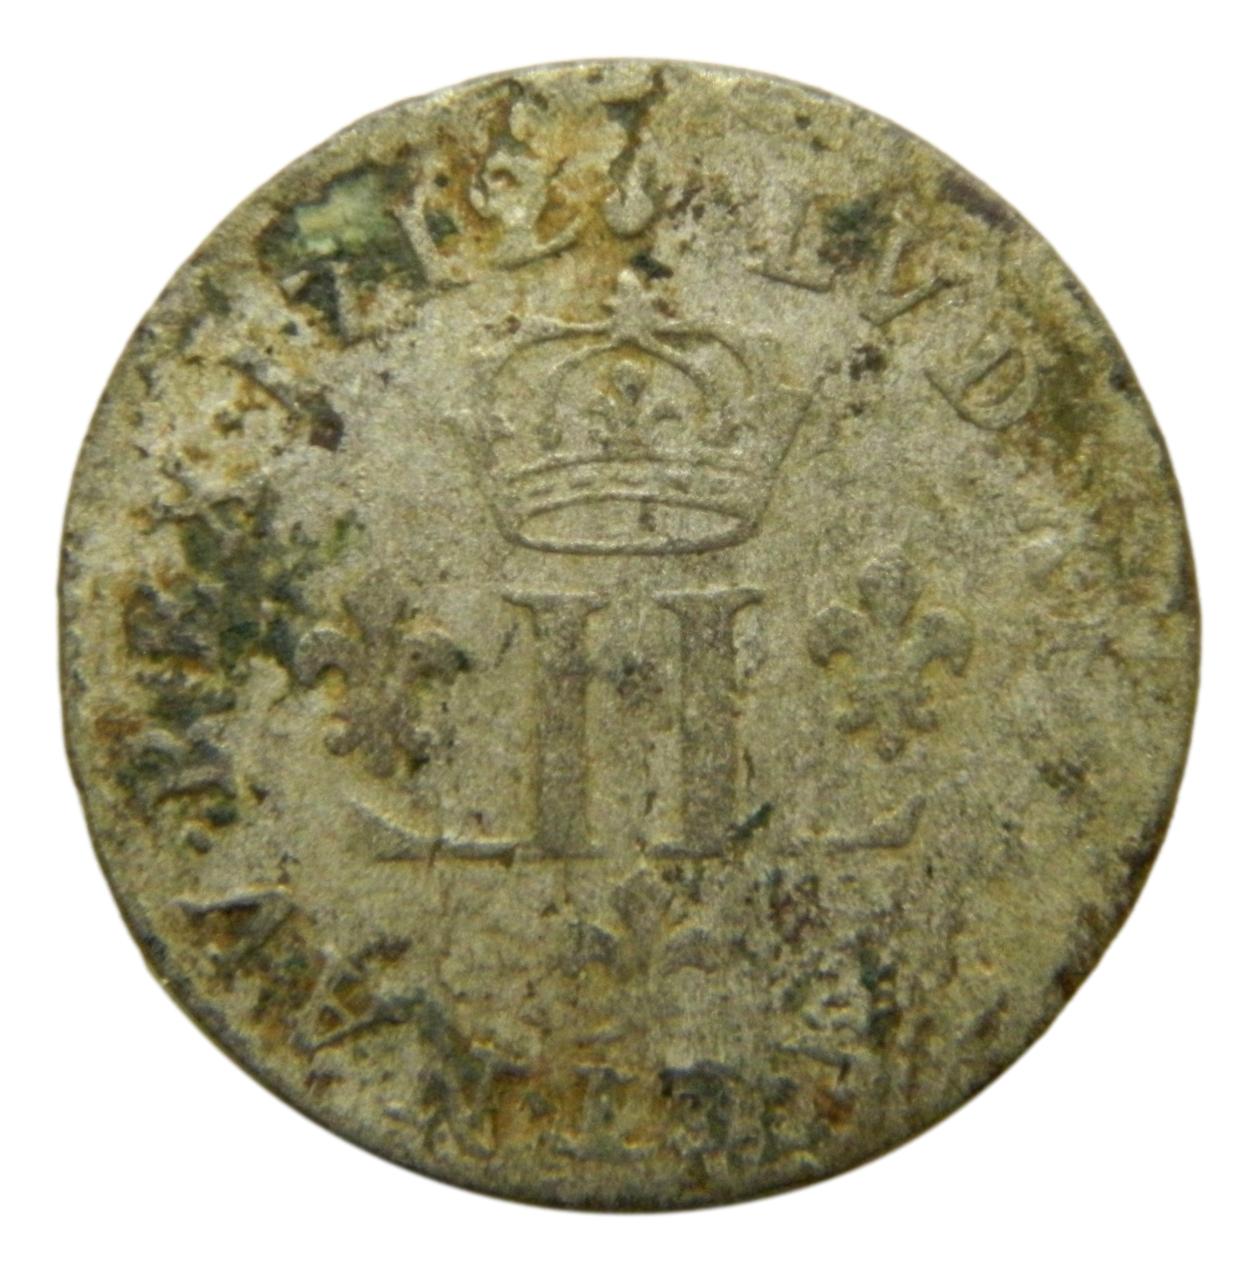 1712 AA - FRANCIA - 15 DENIERS - AMERICAN COLONIAL - LOUIS XIV - BILLON - BC - S9/422